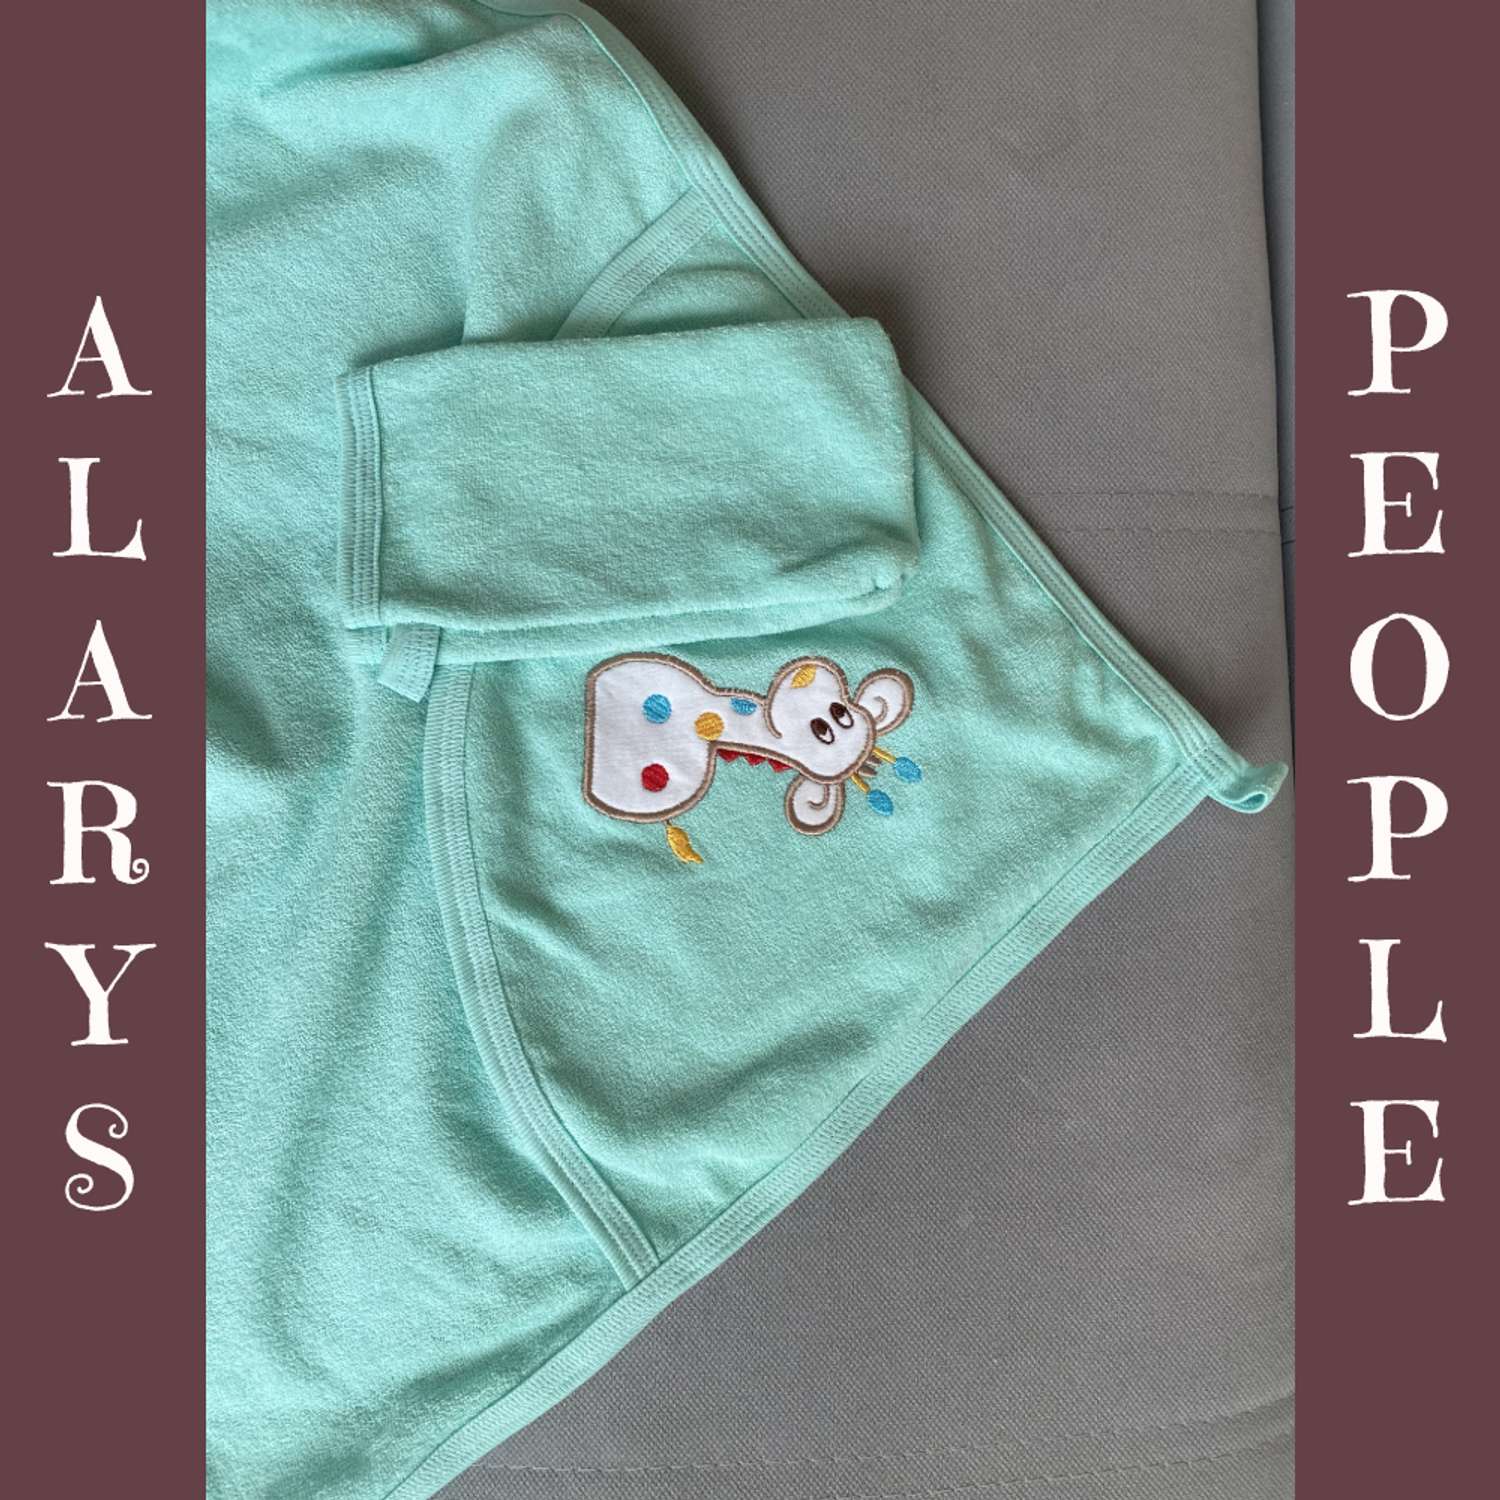 Набор для купания ALARYSPEOPLE пеленка-полотенце с уголком и рукавичка - фото 6